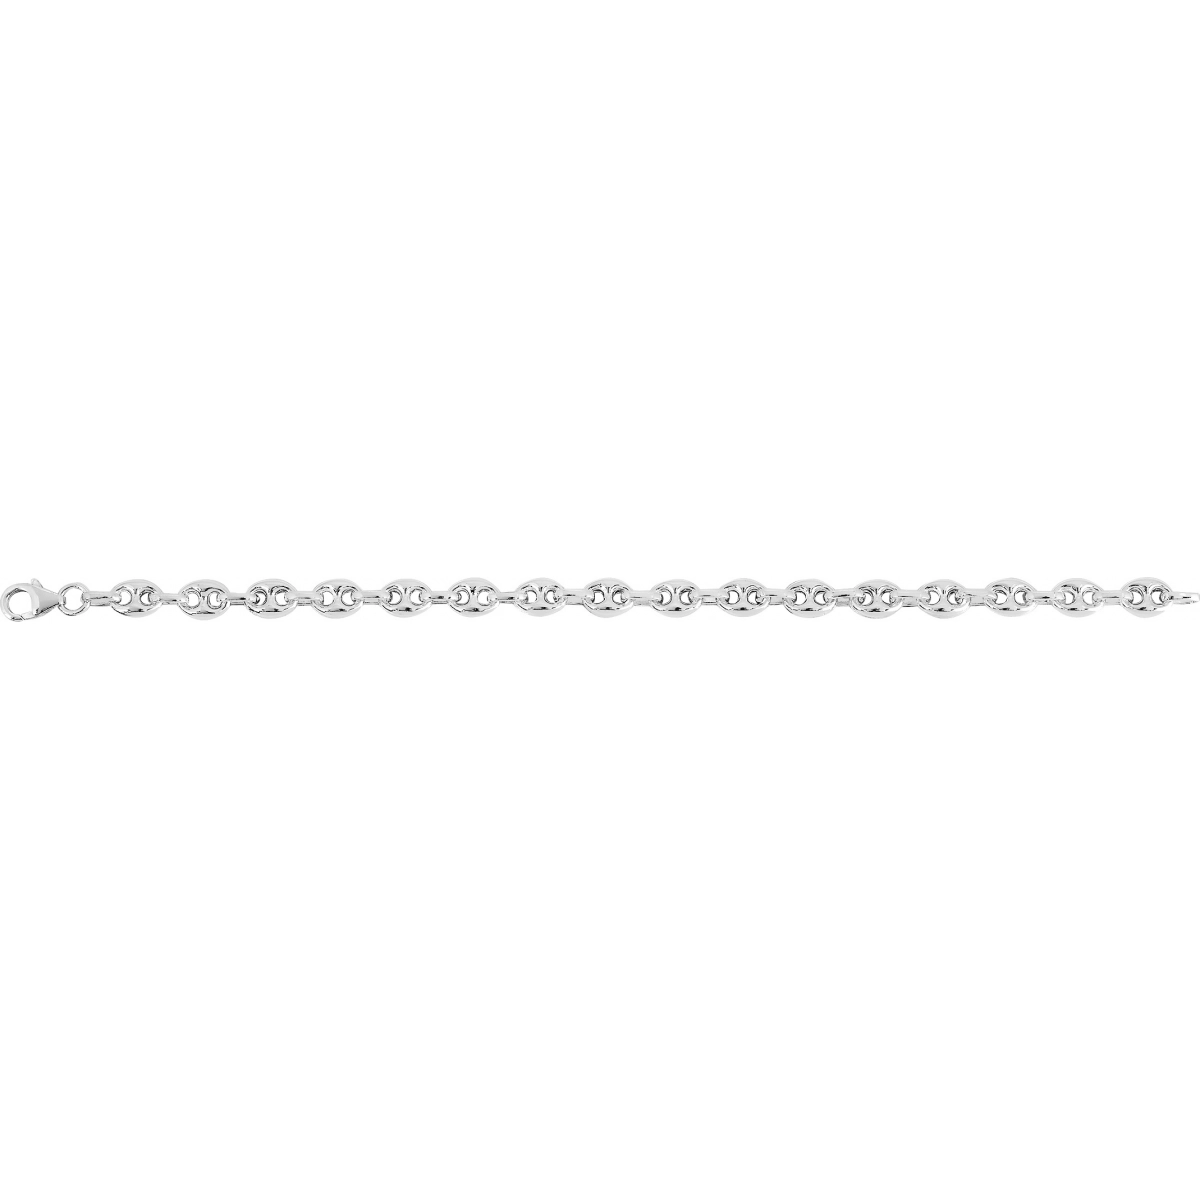 Bracelet rh925 Silver - Size: 21  Lua Blanca  331062B.21